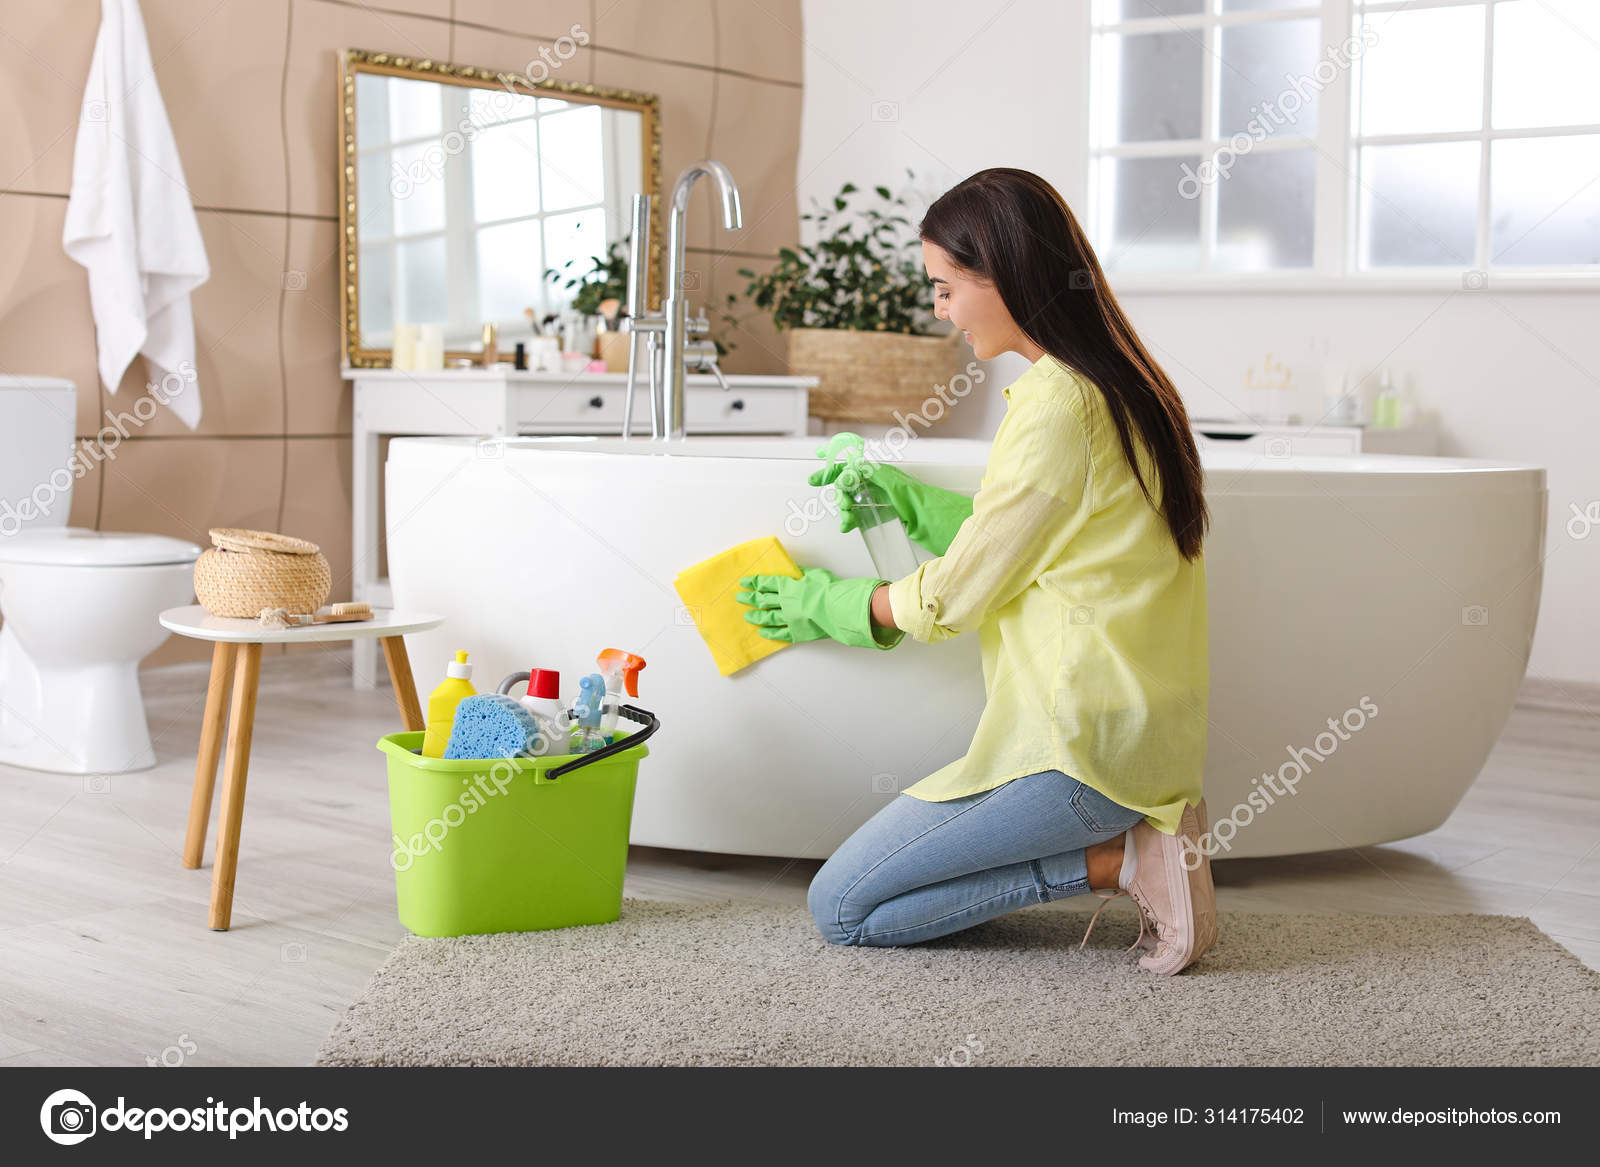 https://st4.depositphotos.com/10614052/31417/i/1600/depositphotos_314175402-stock-photo-beautiful-young-woman-cleaning-bathroom.jpg